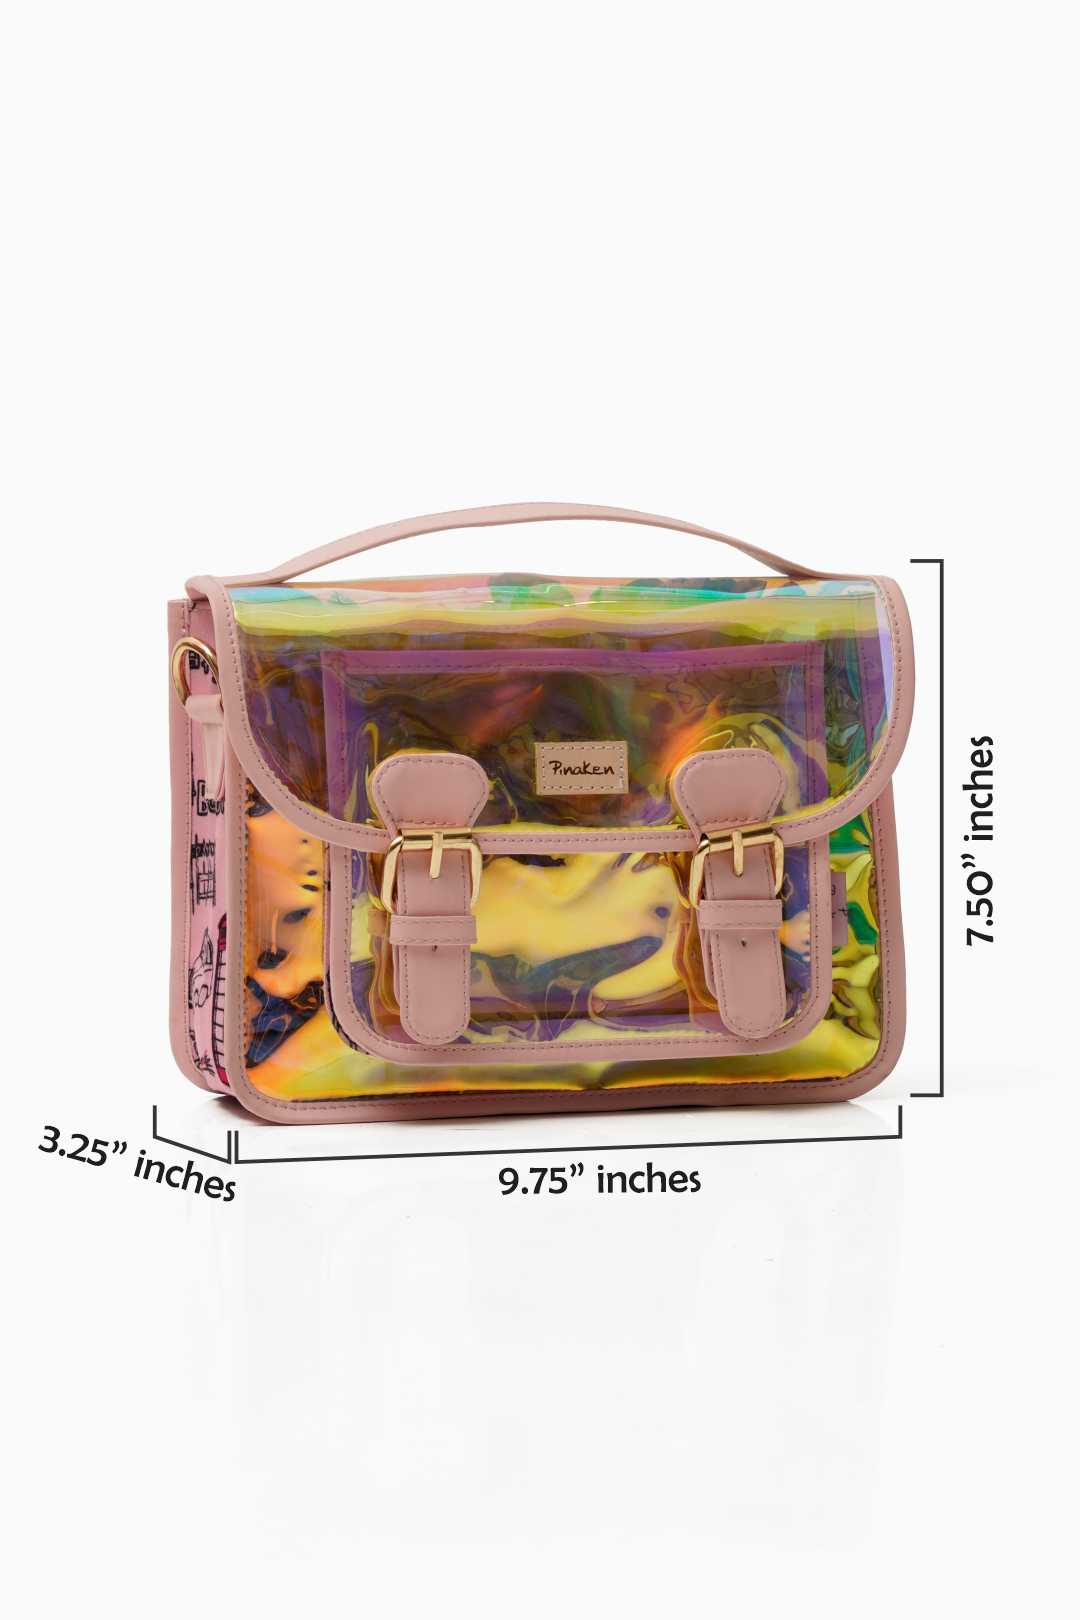 Buy HAMSTER London Women's Tote Bag (Aqua, Size: 40X10X40 cm) at Amazon.in